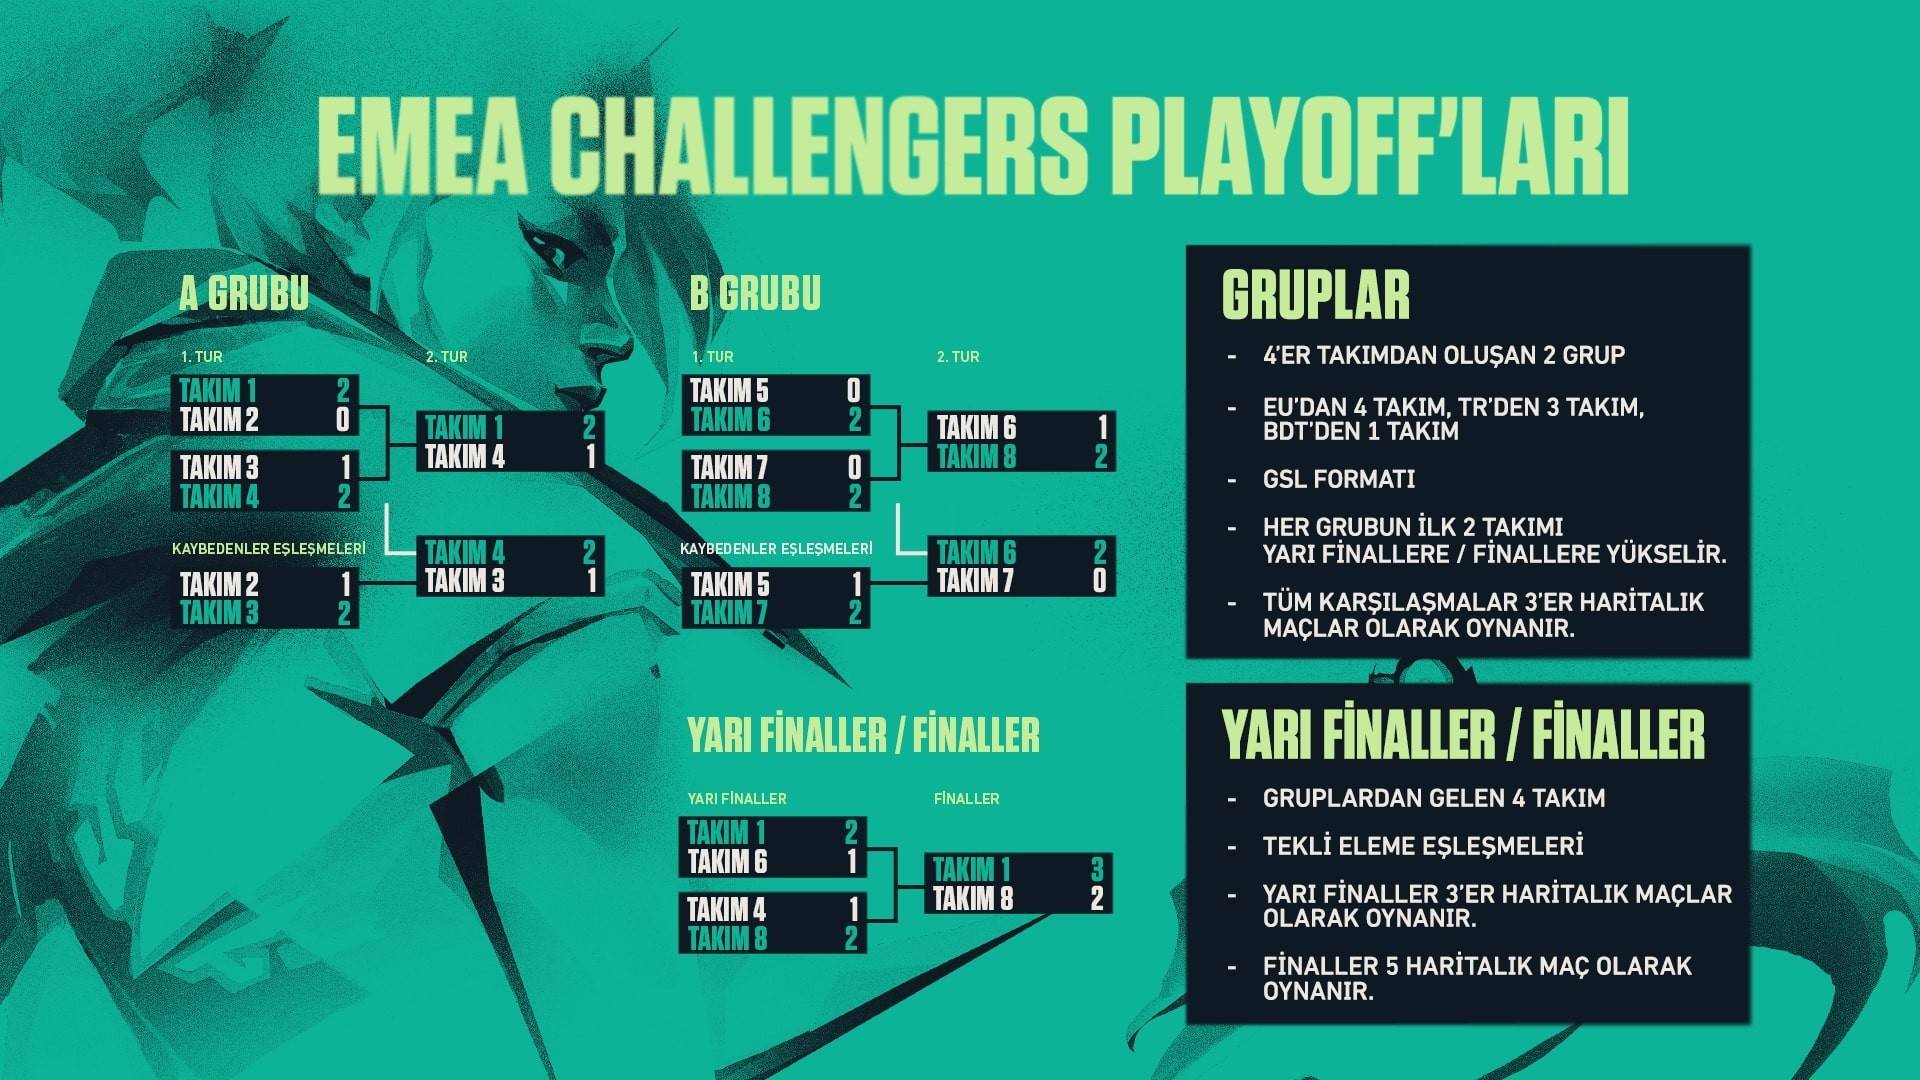 EMEA Challengers Playoff lar Format